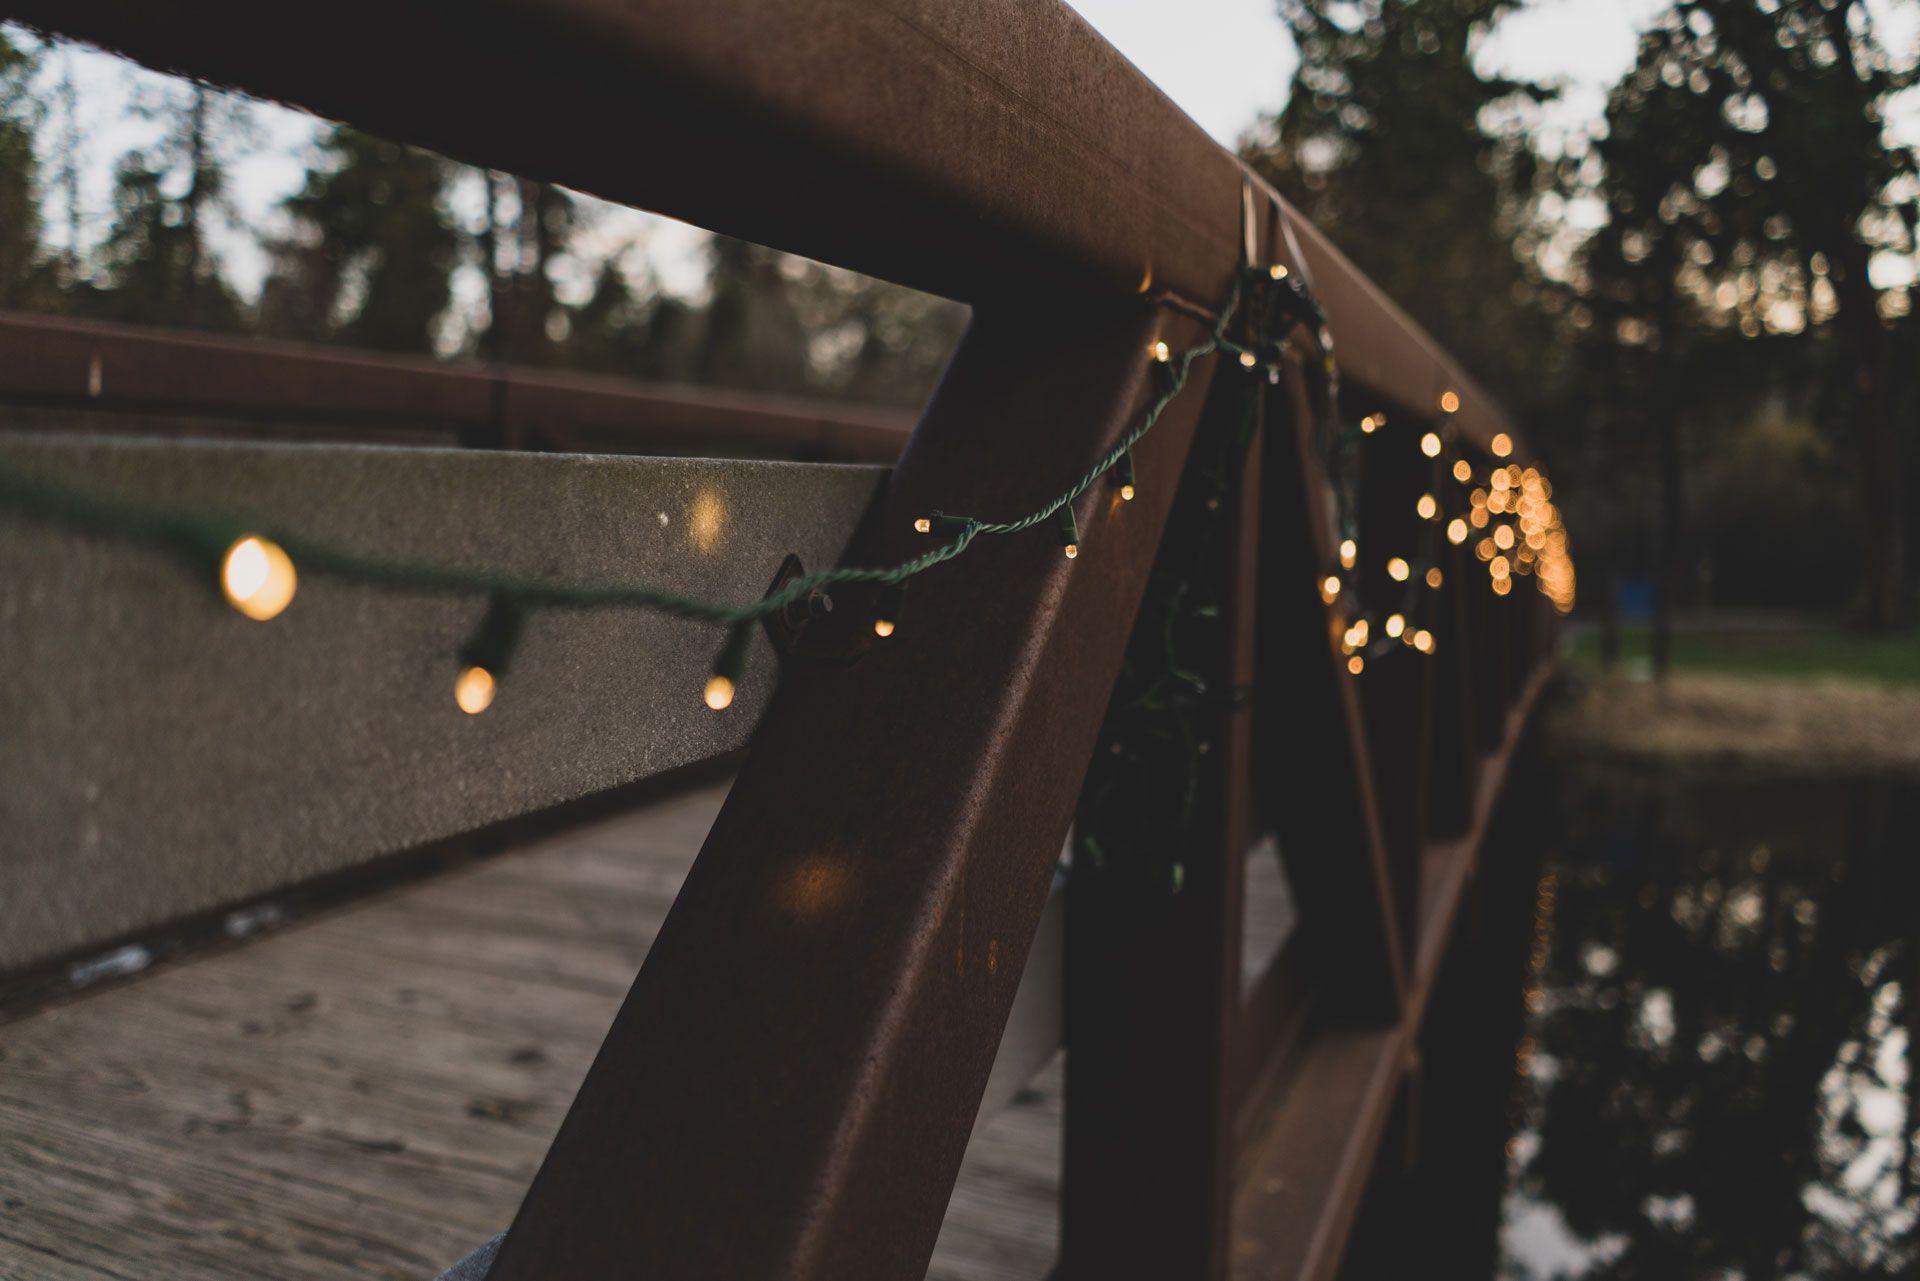 wooden bridge with warm white led light string strung on rail